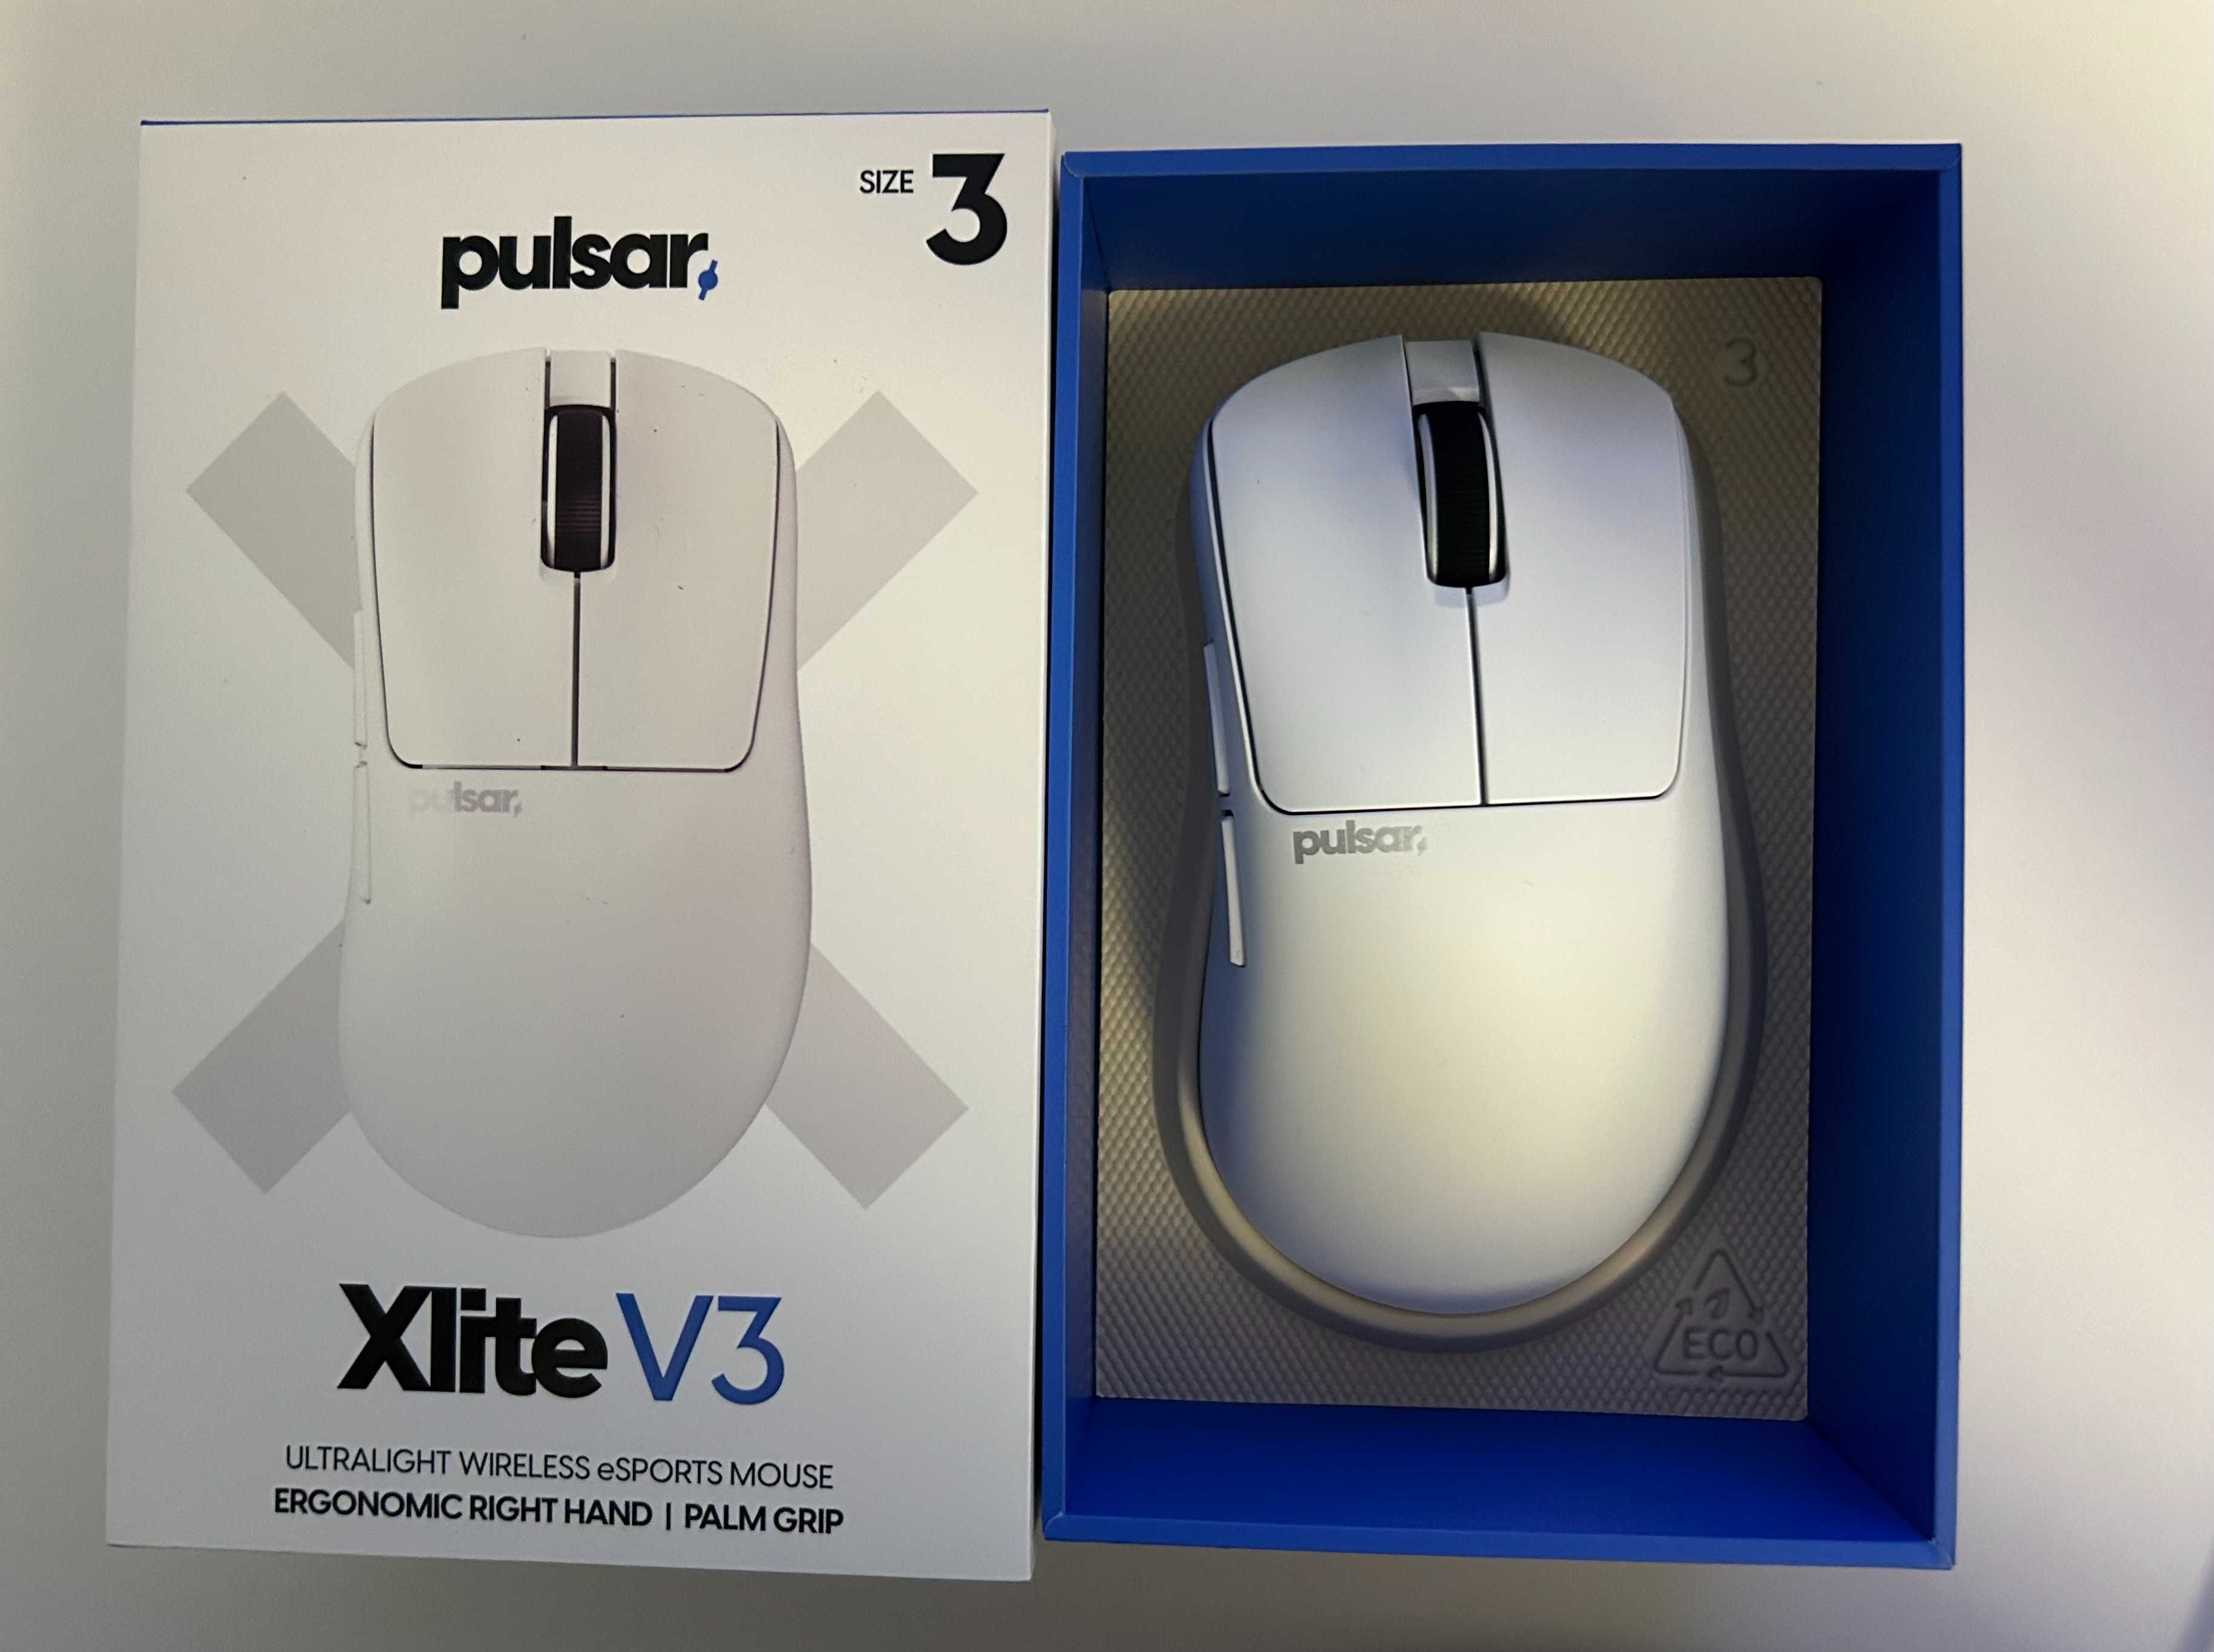 Pulsar Xlite V3 - Size 3 - White